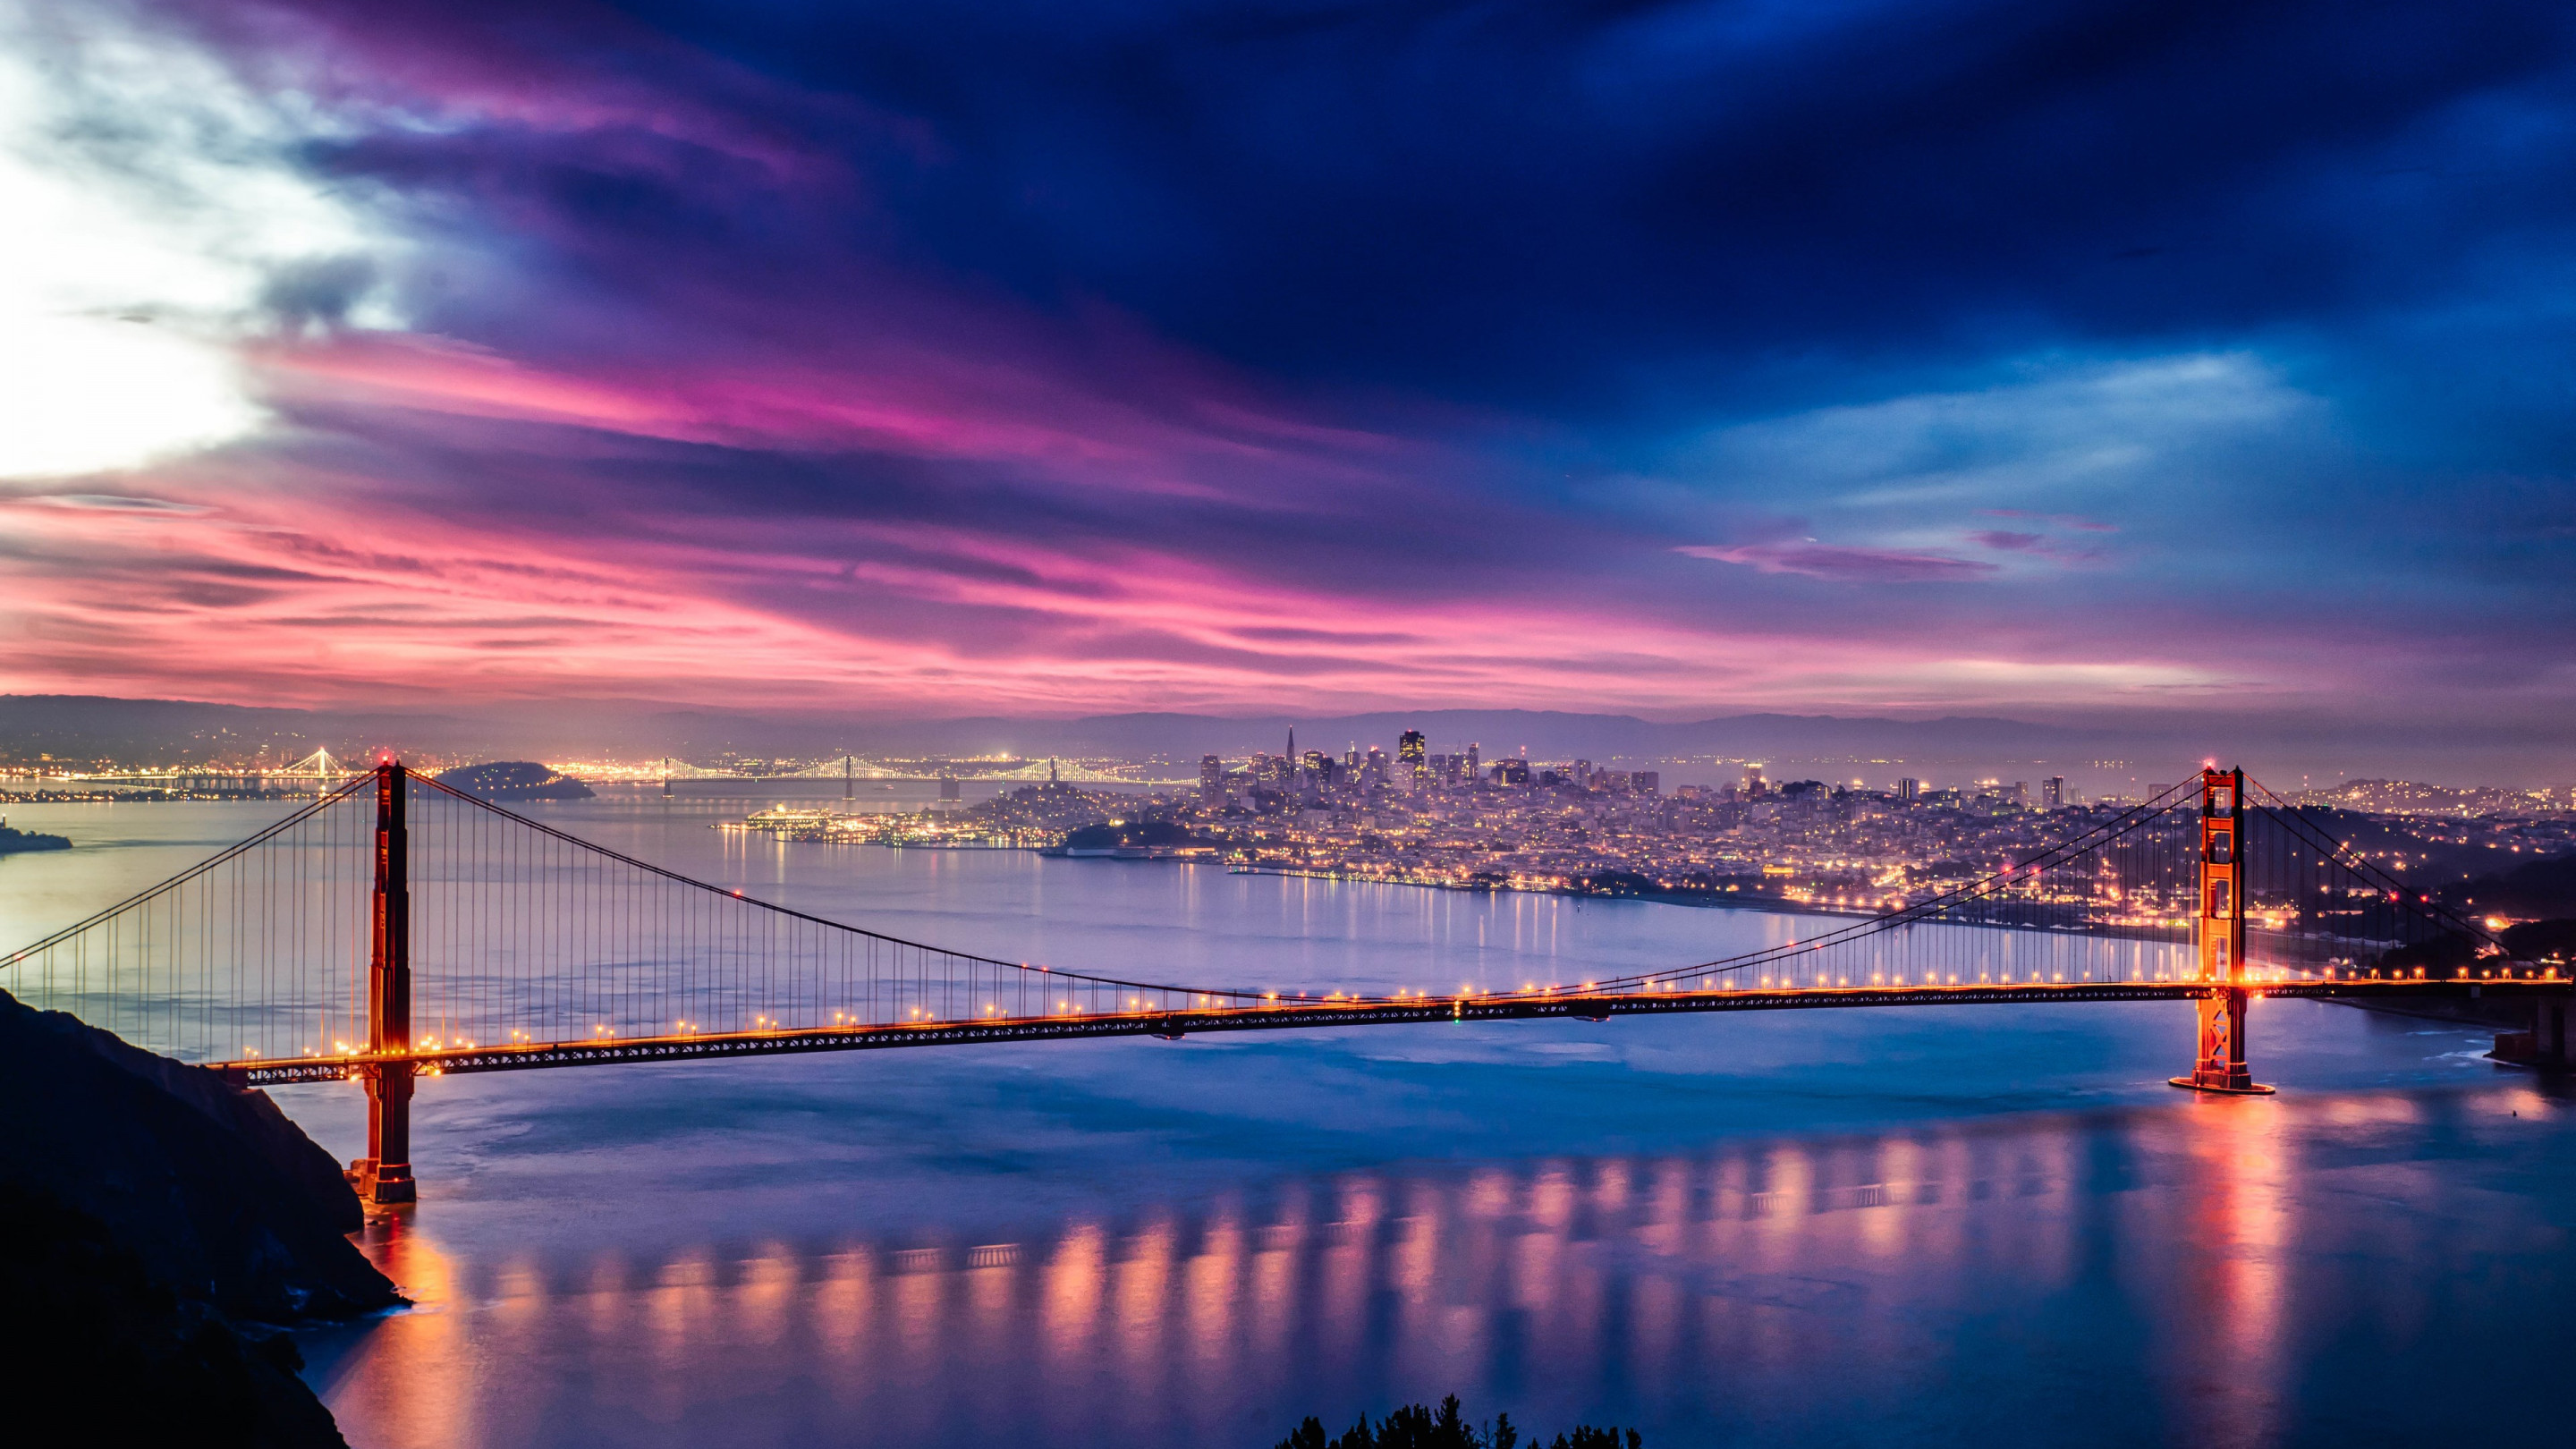 Skyfire over San Francisco Bay Bridge wallpaper 2880x1620